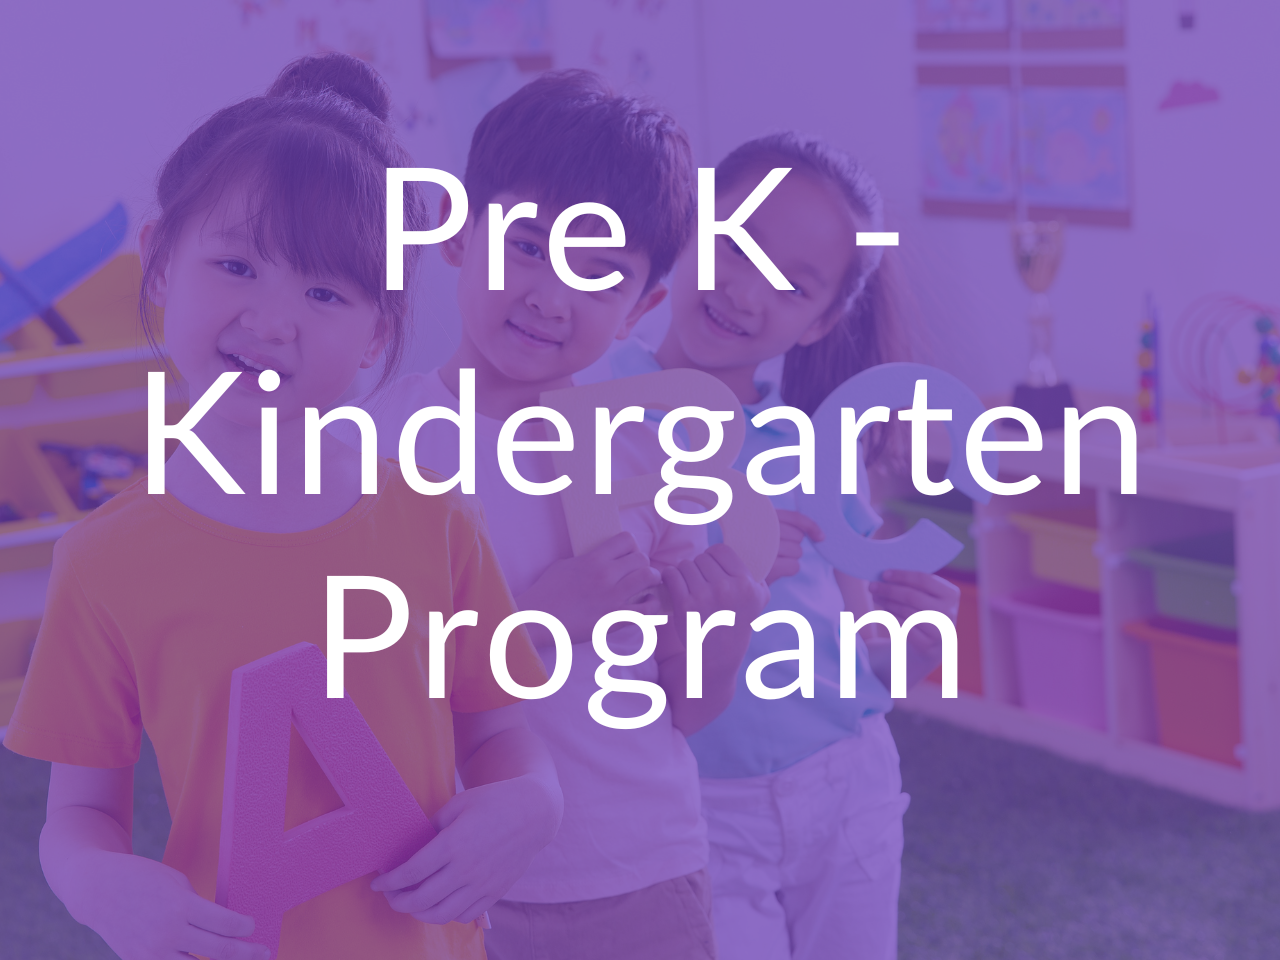 Pre k - Kindergarten program with 3 small children holding the alphabet